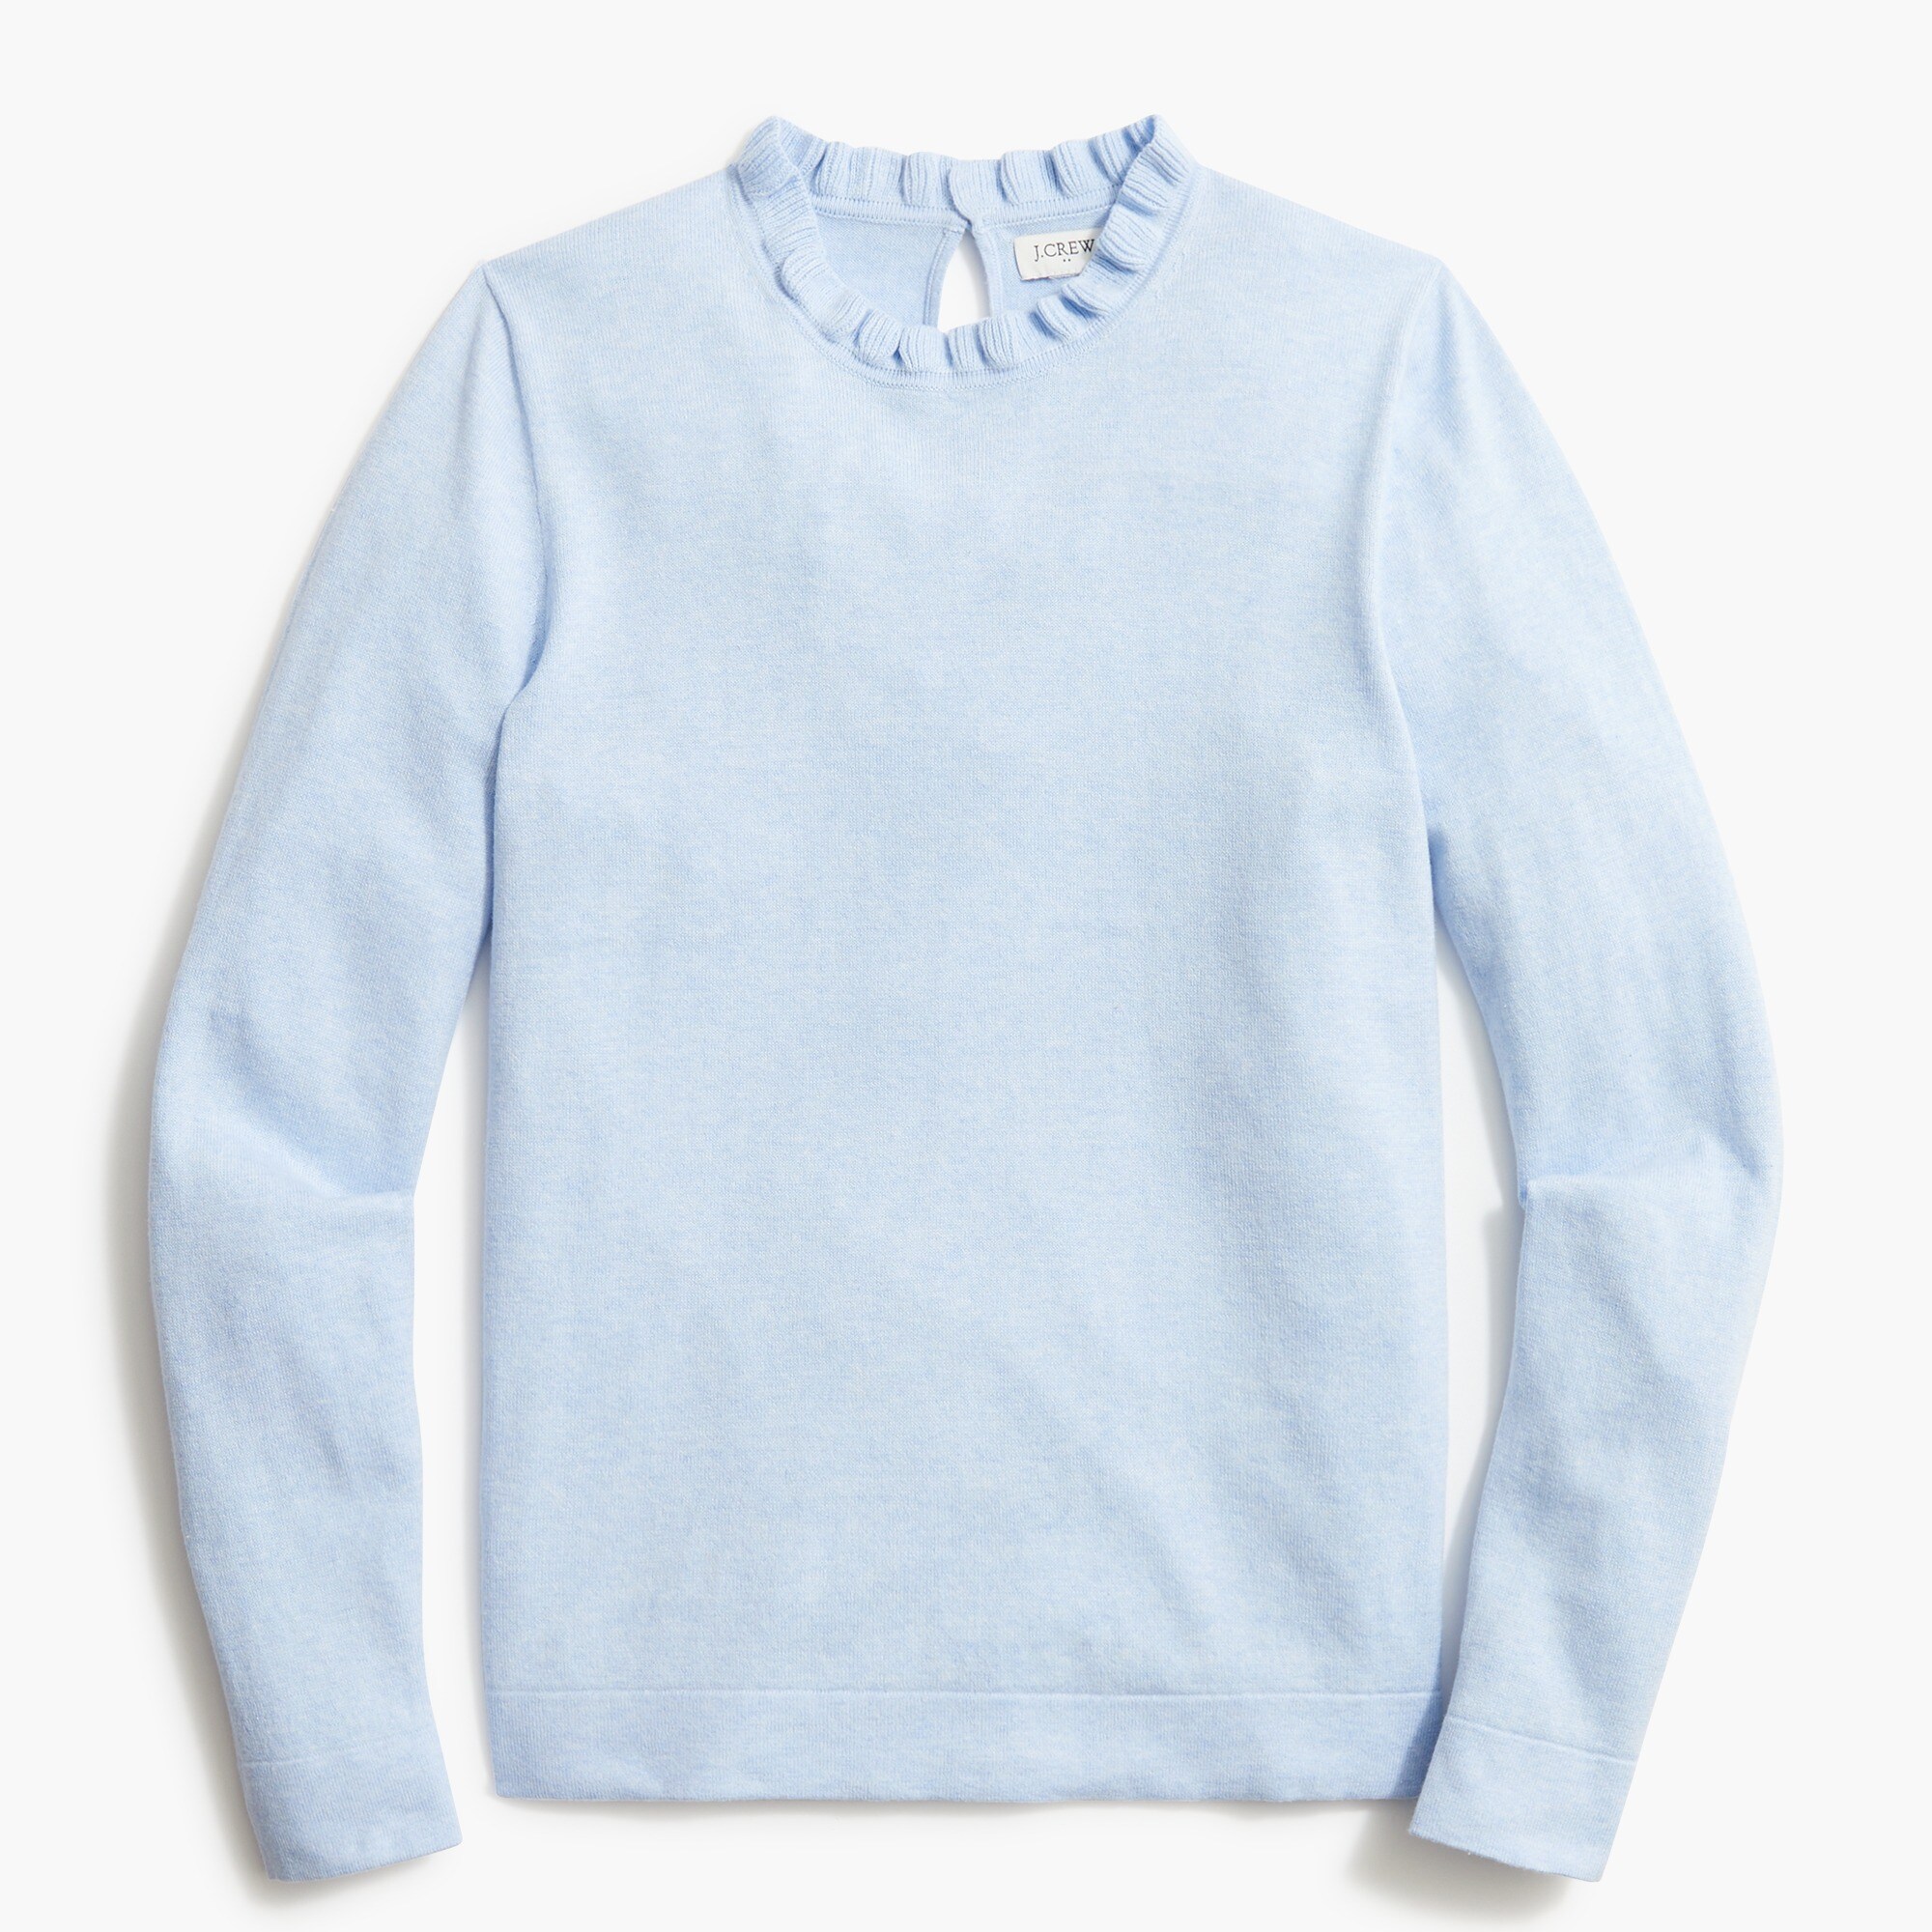  Ruffleneck sweater